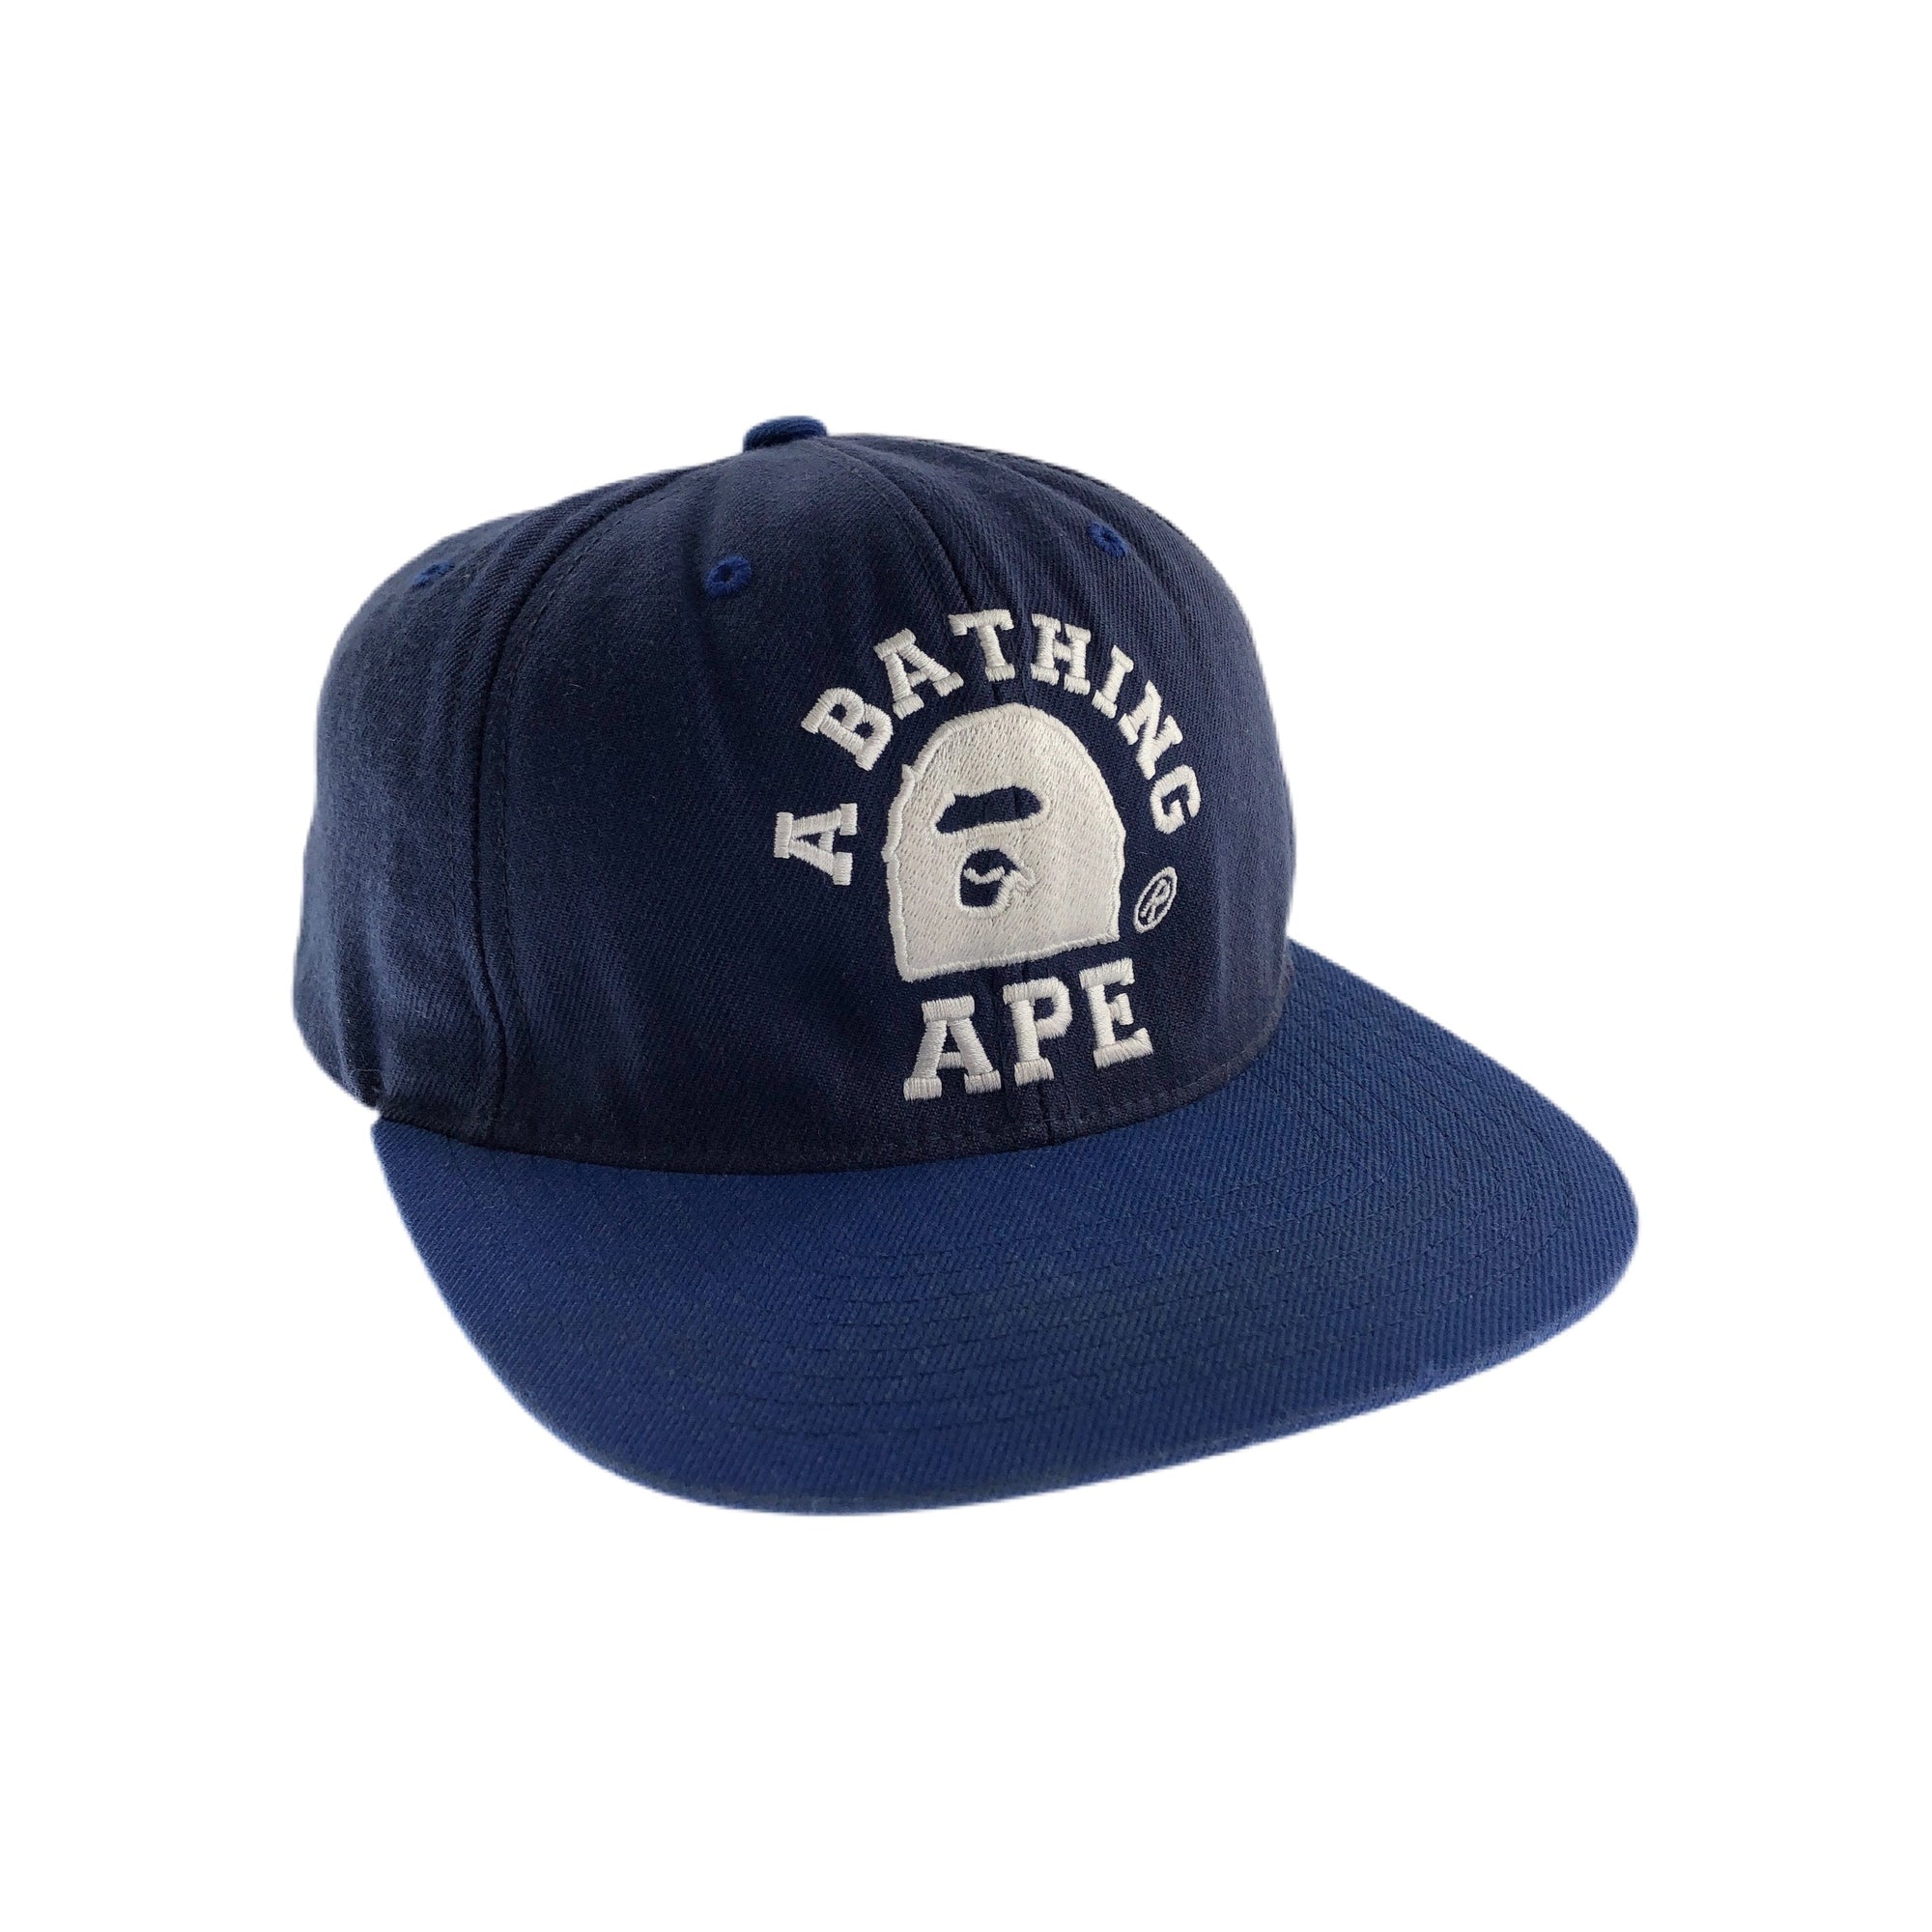 Bape college logo snap back hat cap - second wave vintage store